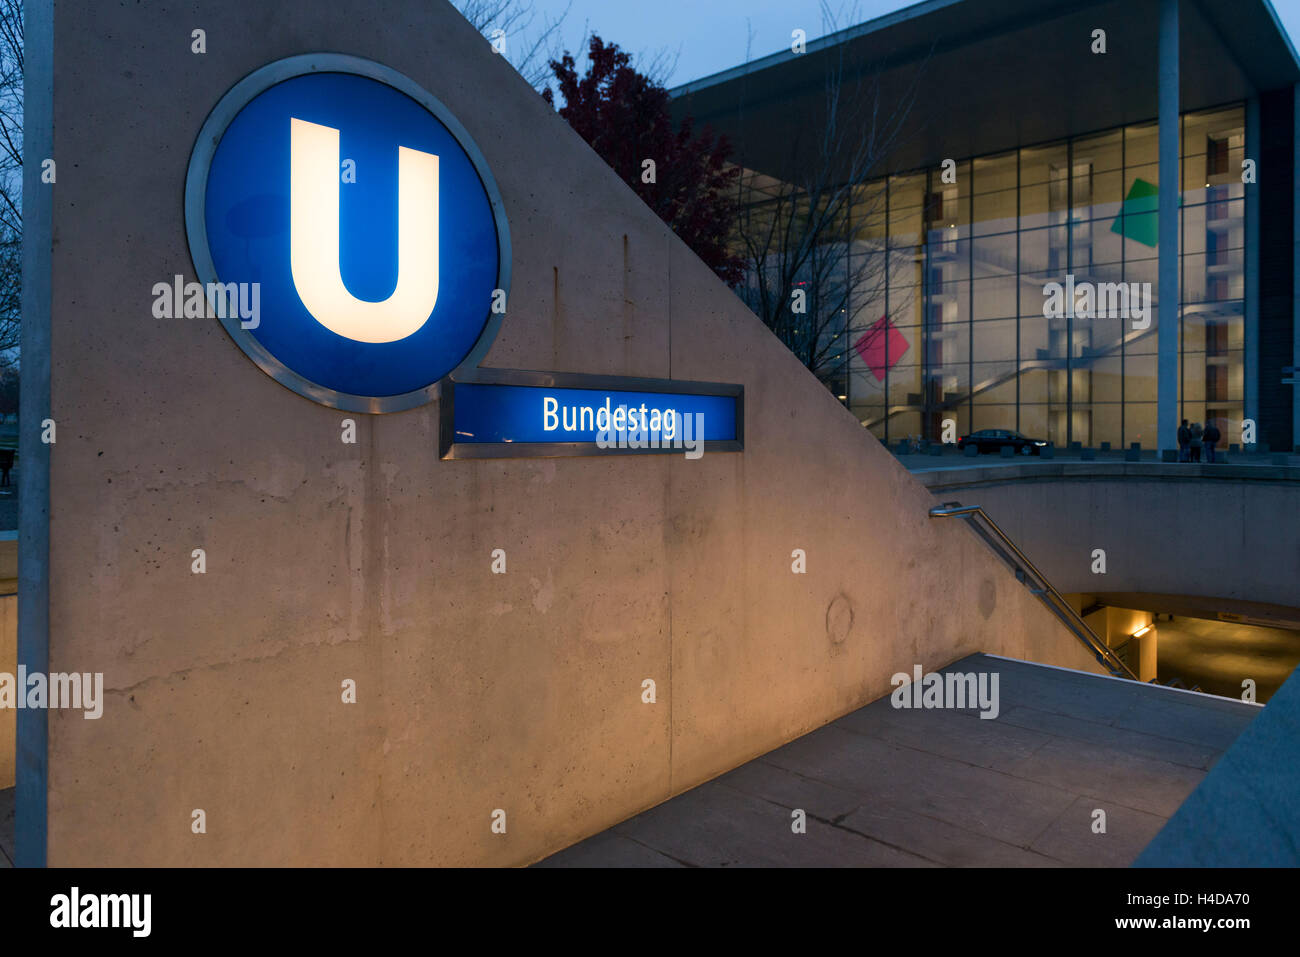 Germany, Berlin, underground stop the Bundestag Stock Photo